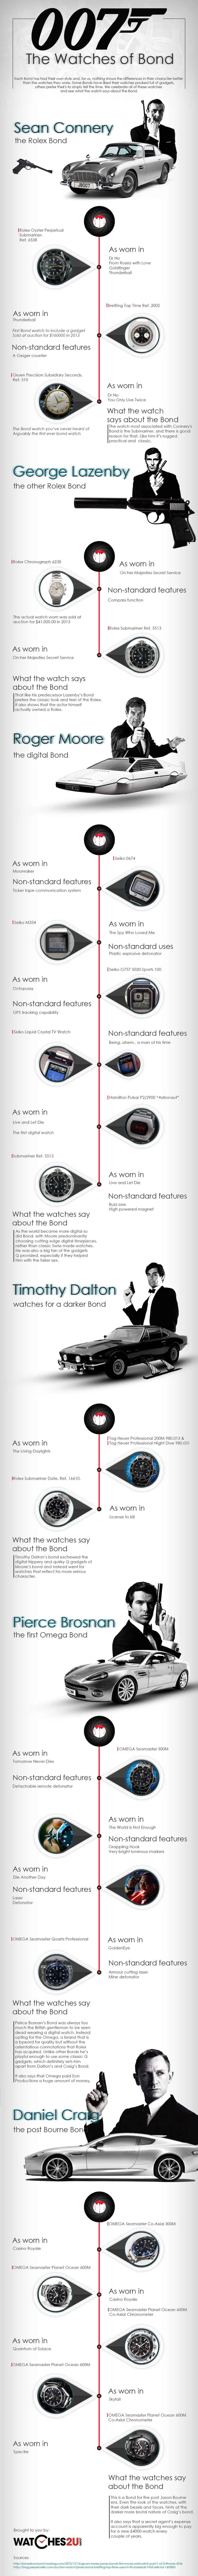 alle horloges van James Bond